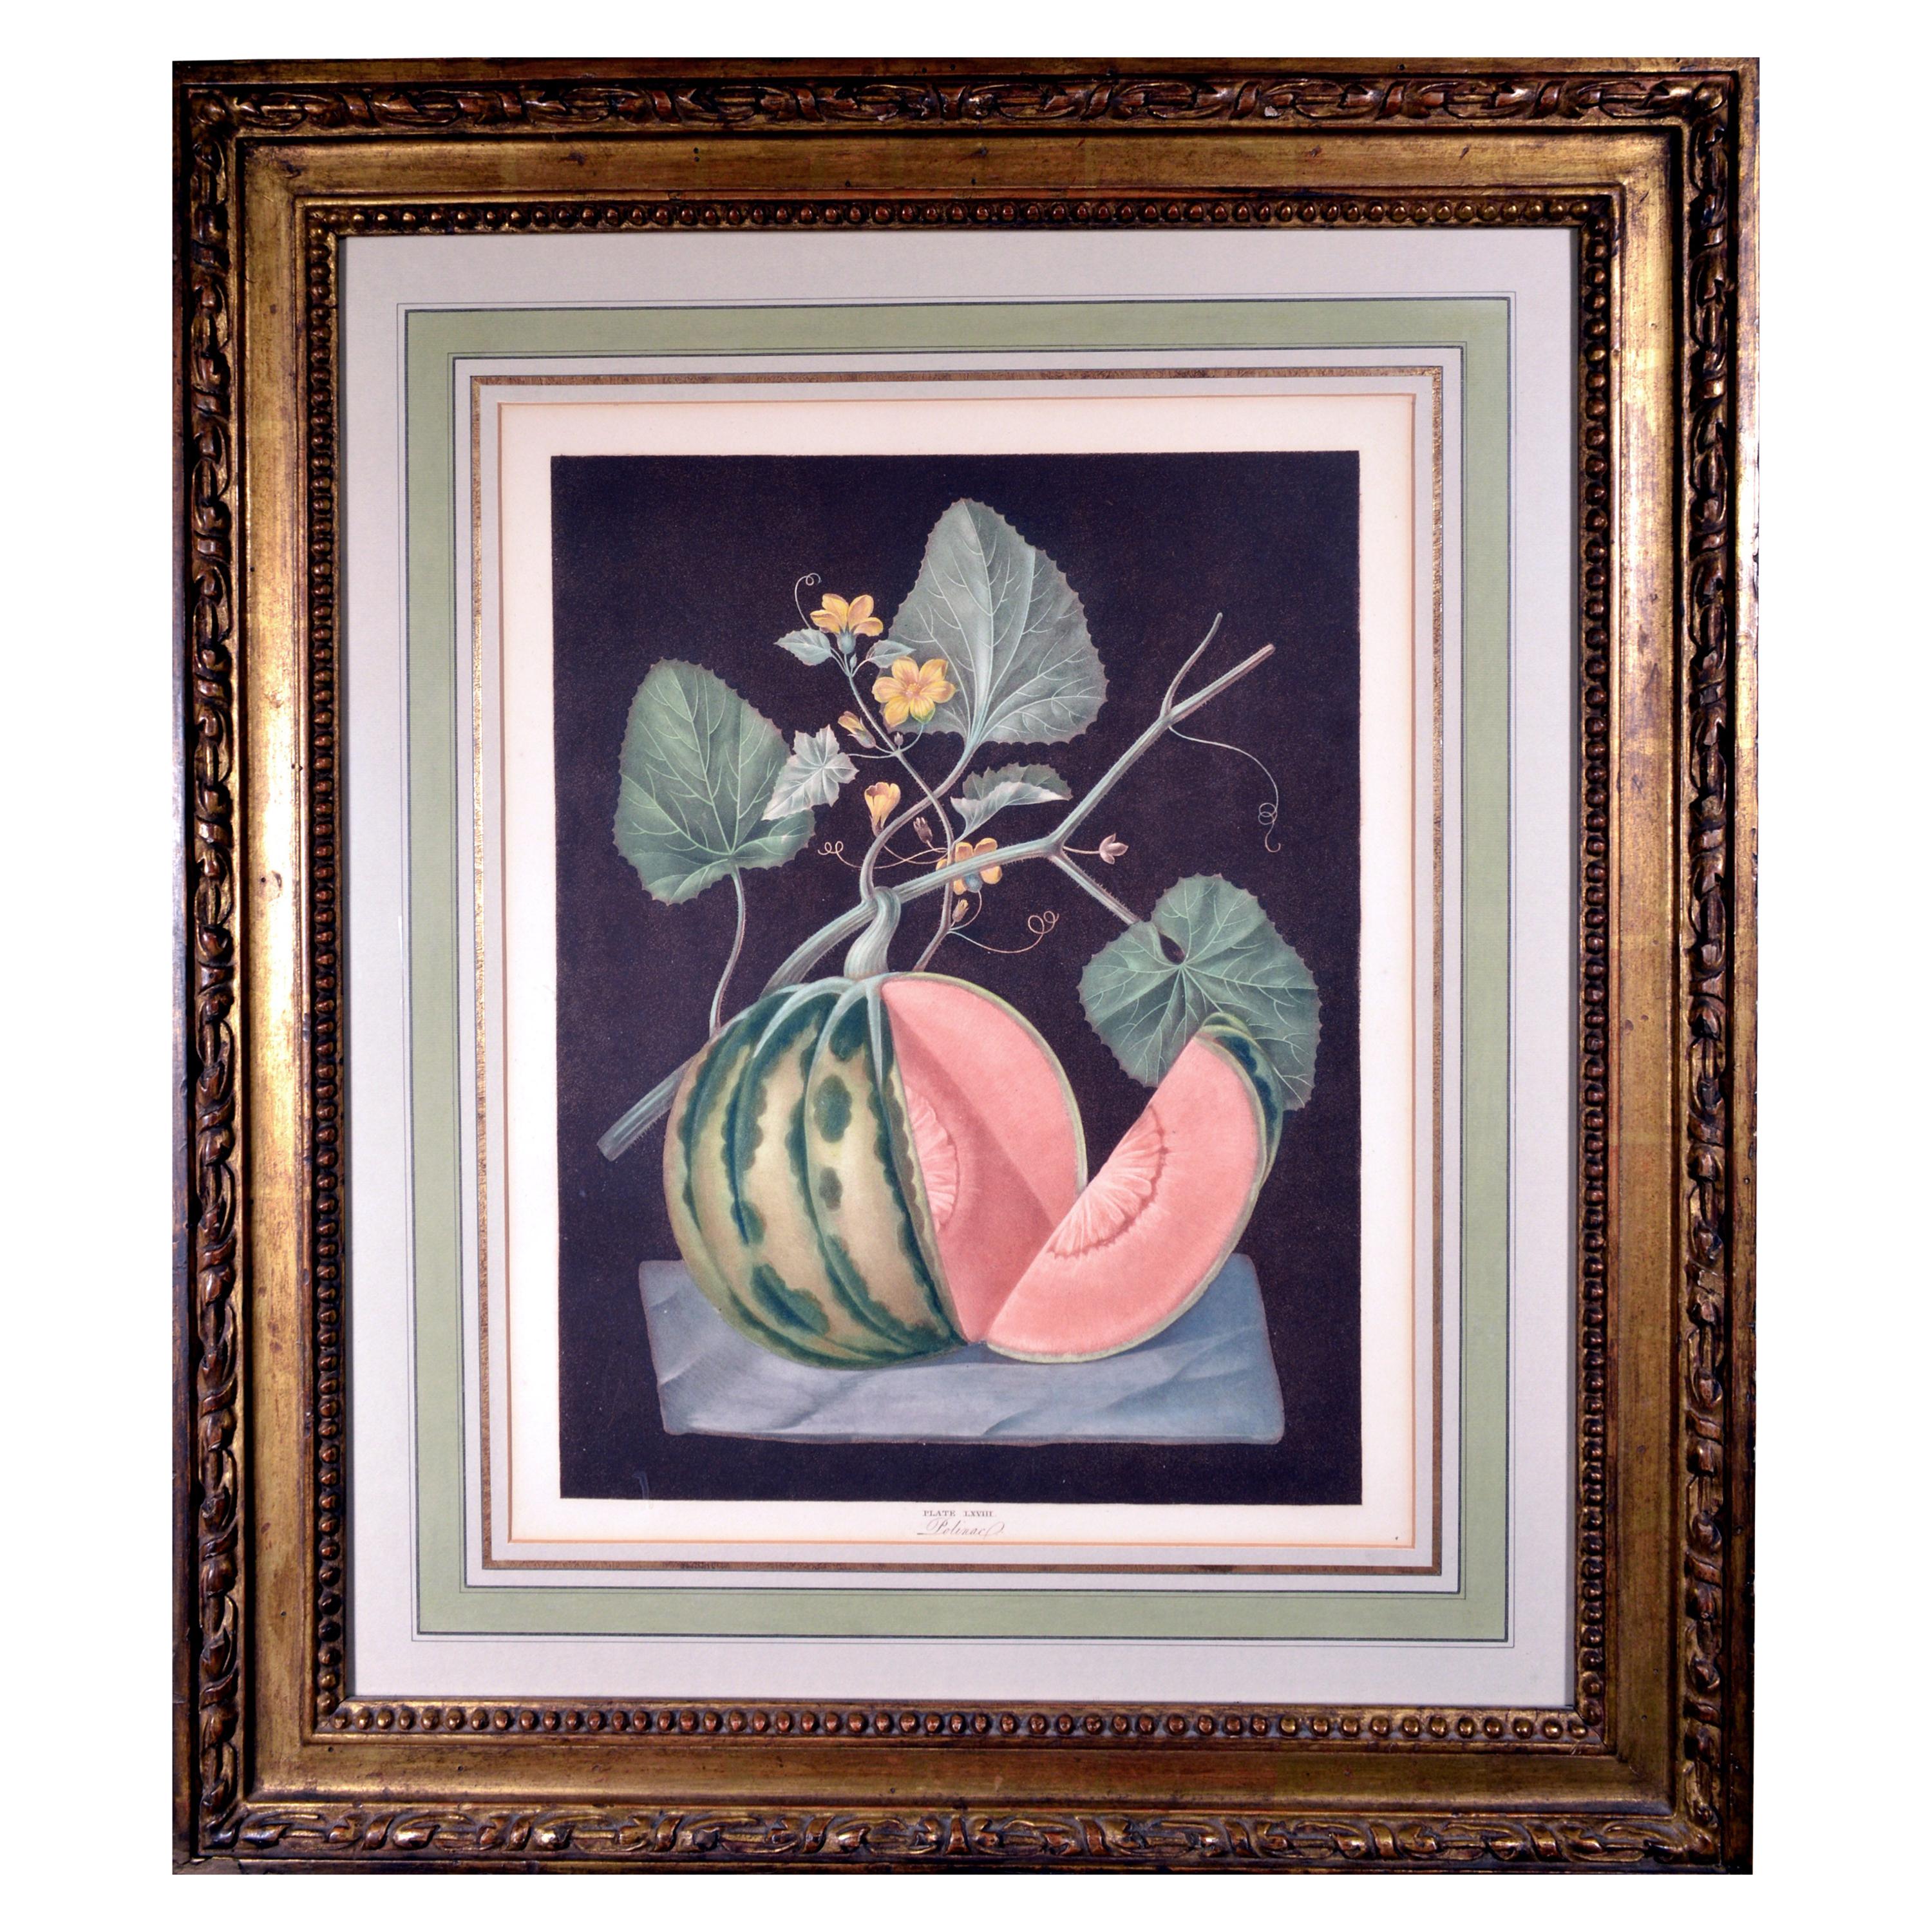 George Brookshaw Framed Engraving of a Melon, Plate Lxviii, Polinac